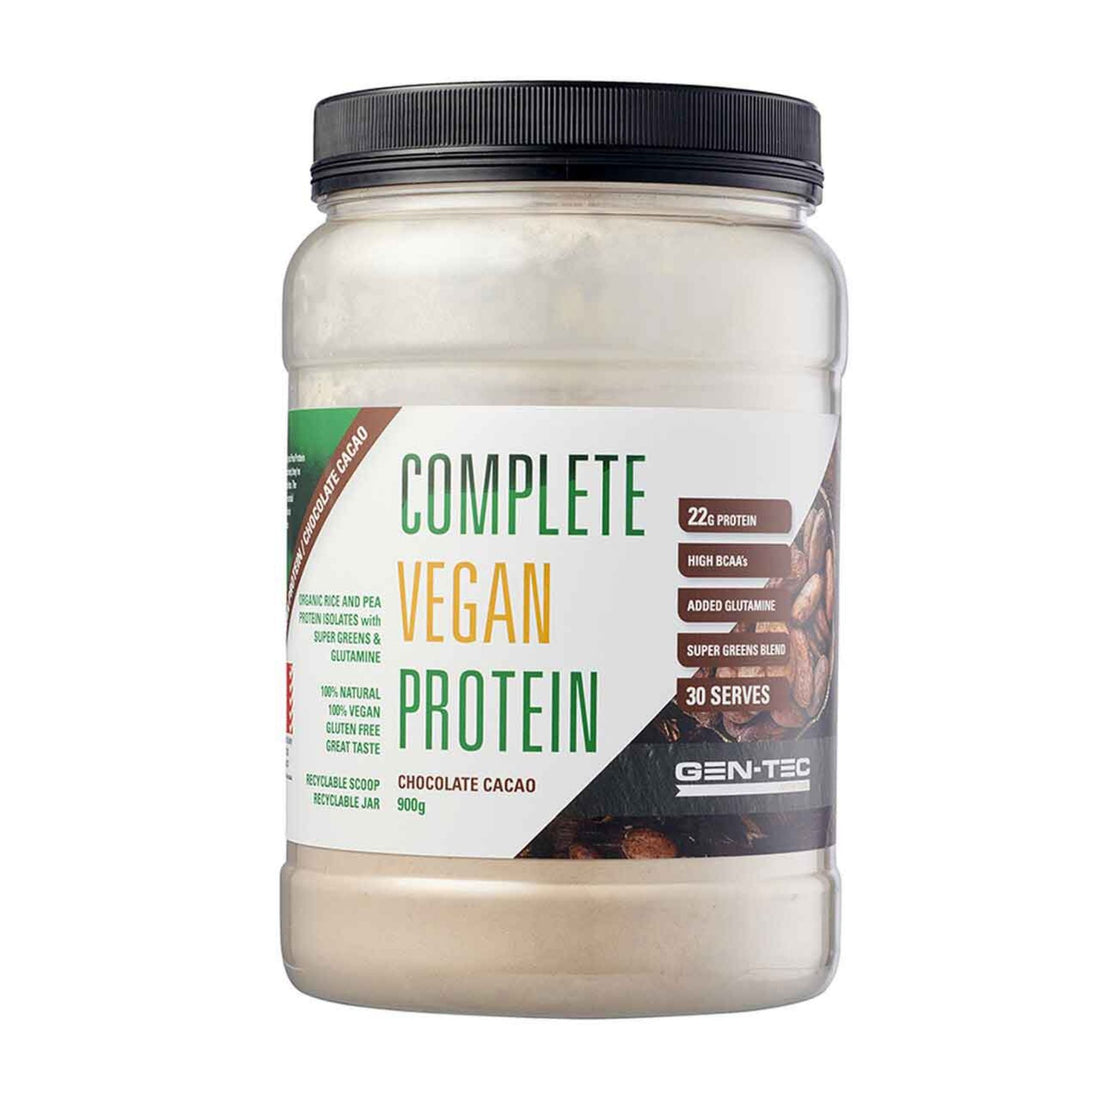 Gentec Complete Vegan Protein Plant Powder